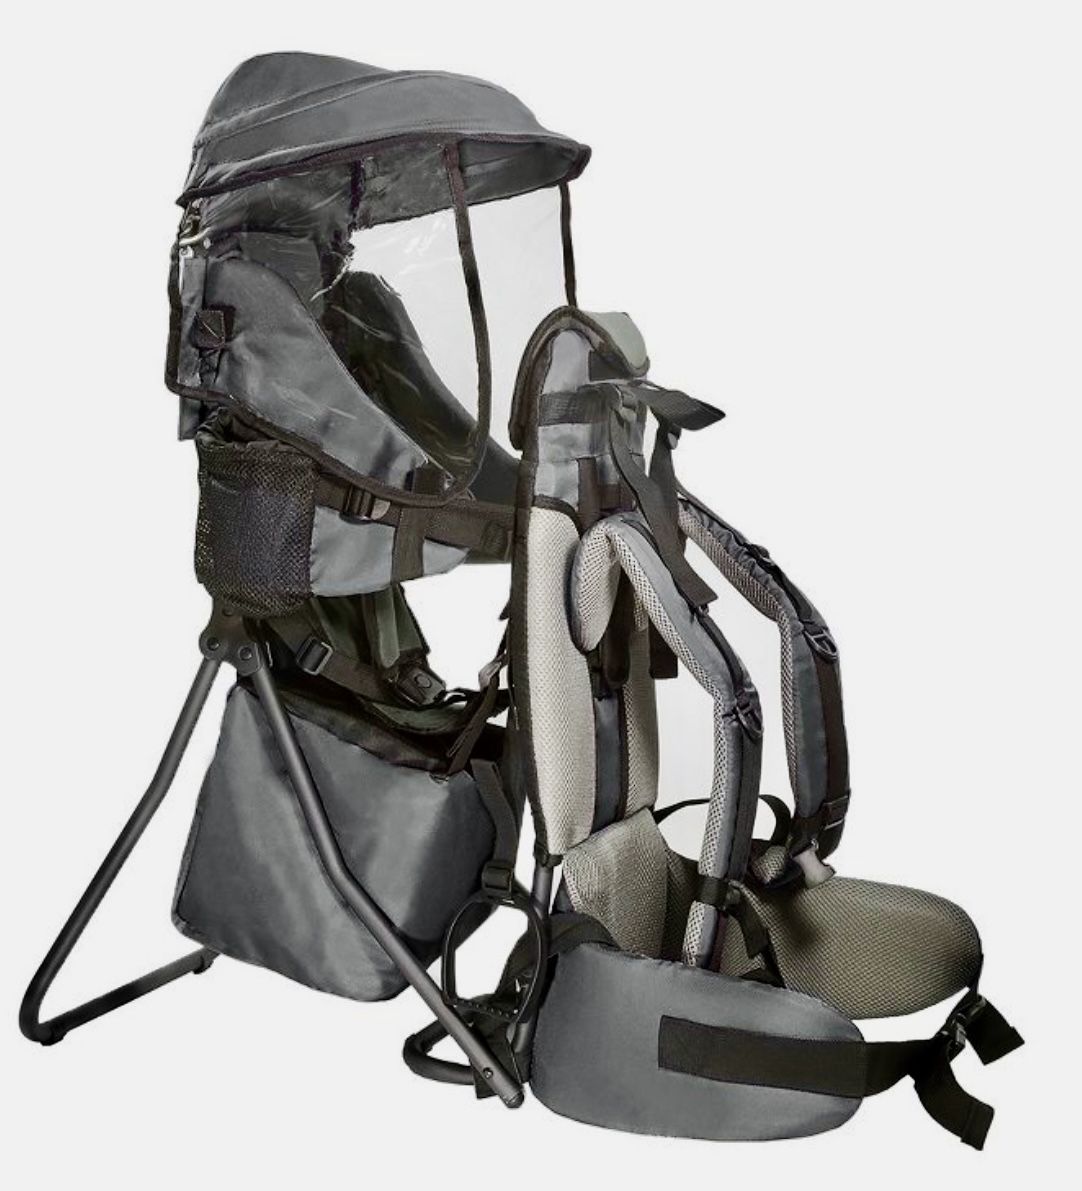 ClevrPlus Baby Backpack Camping Hiking Child Toddler Carrier Shade Visor, Grey/Black